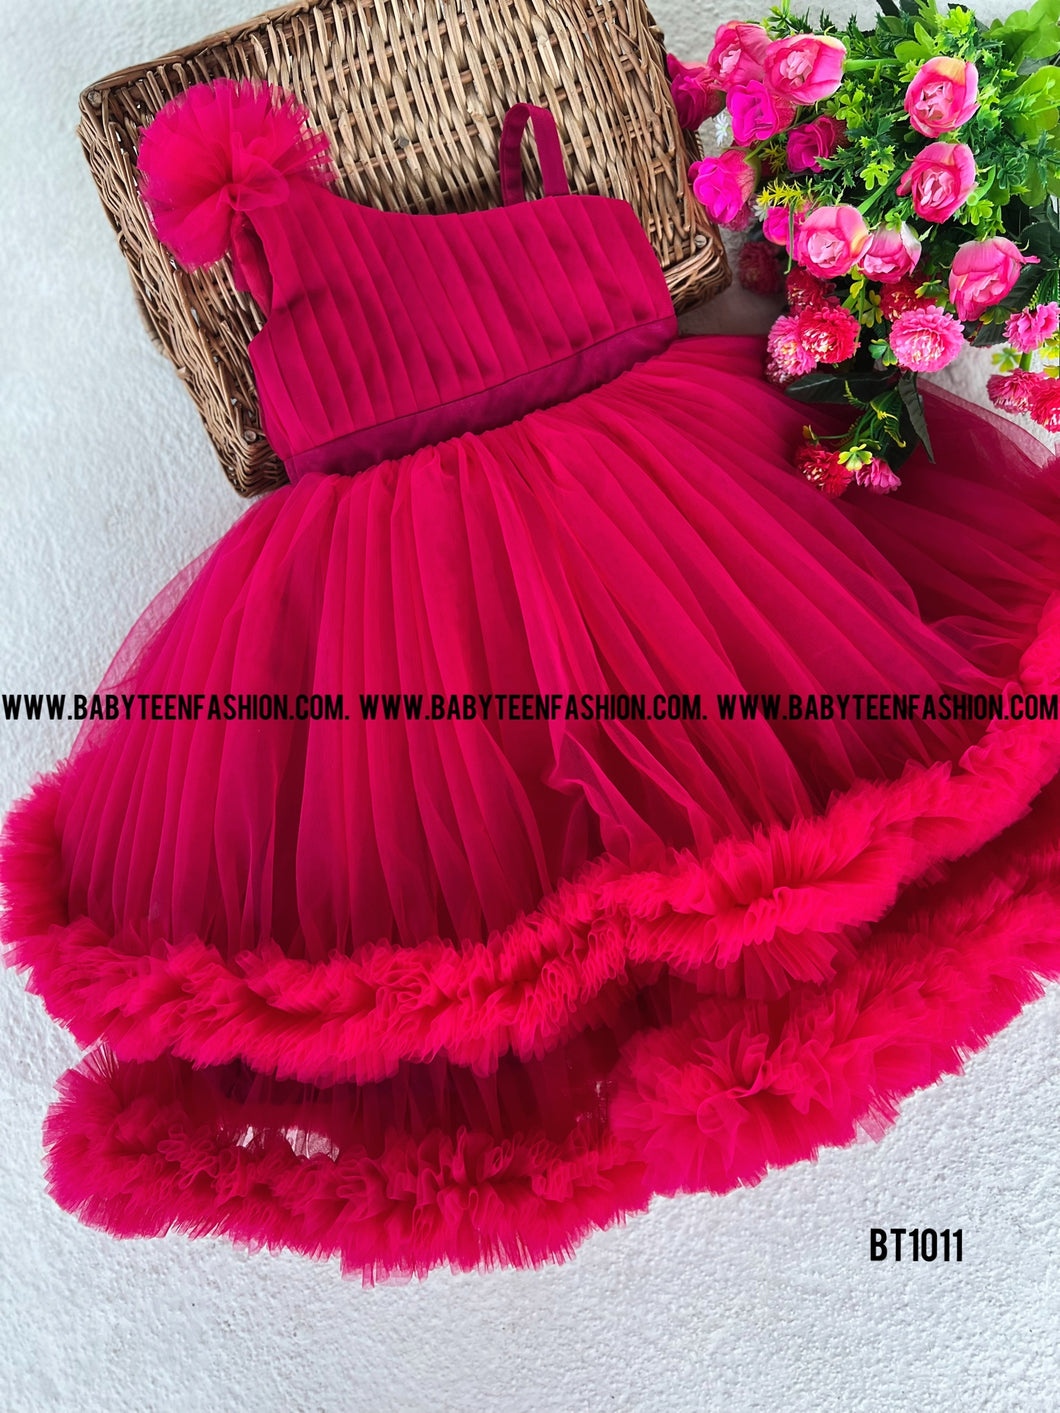 BT1011 Ruby Ruffles - Chic Celebration Dress